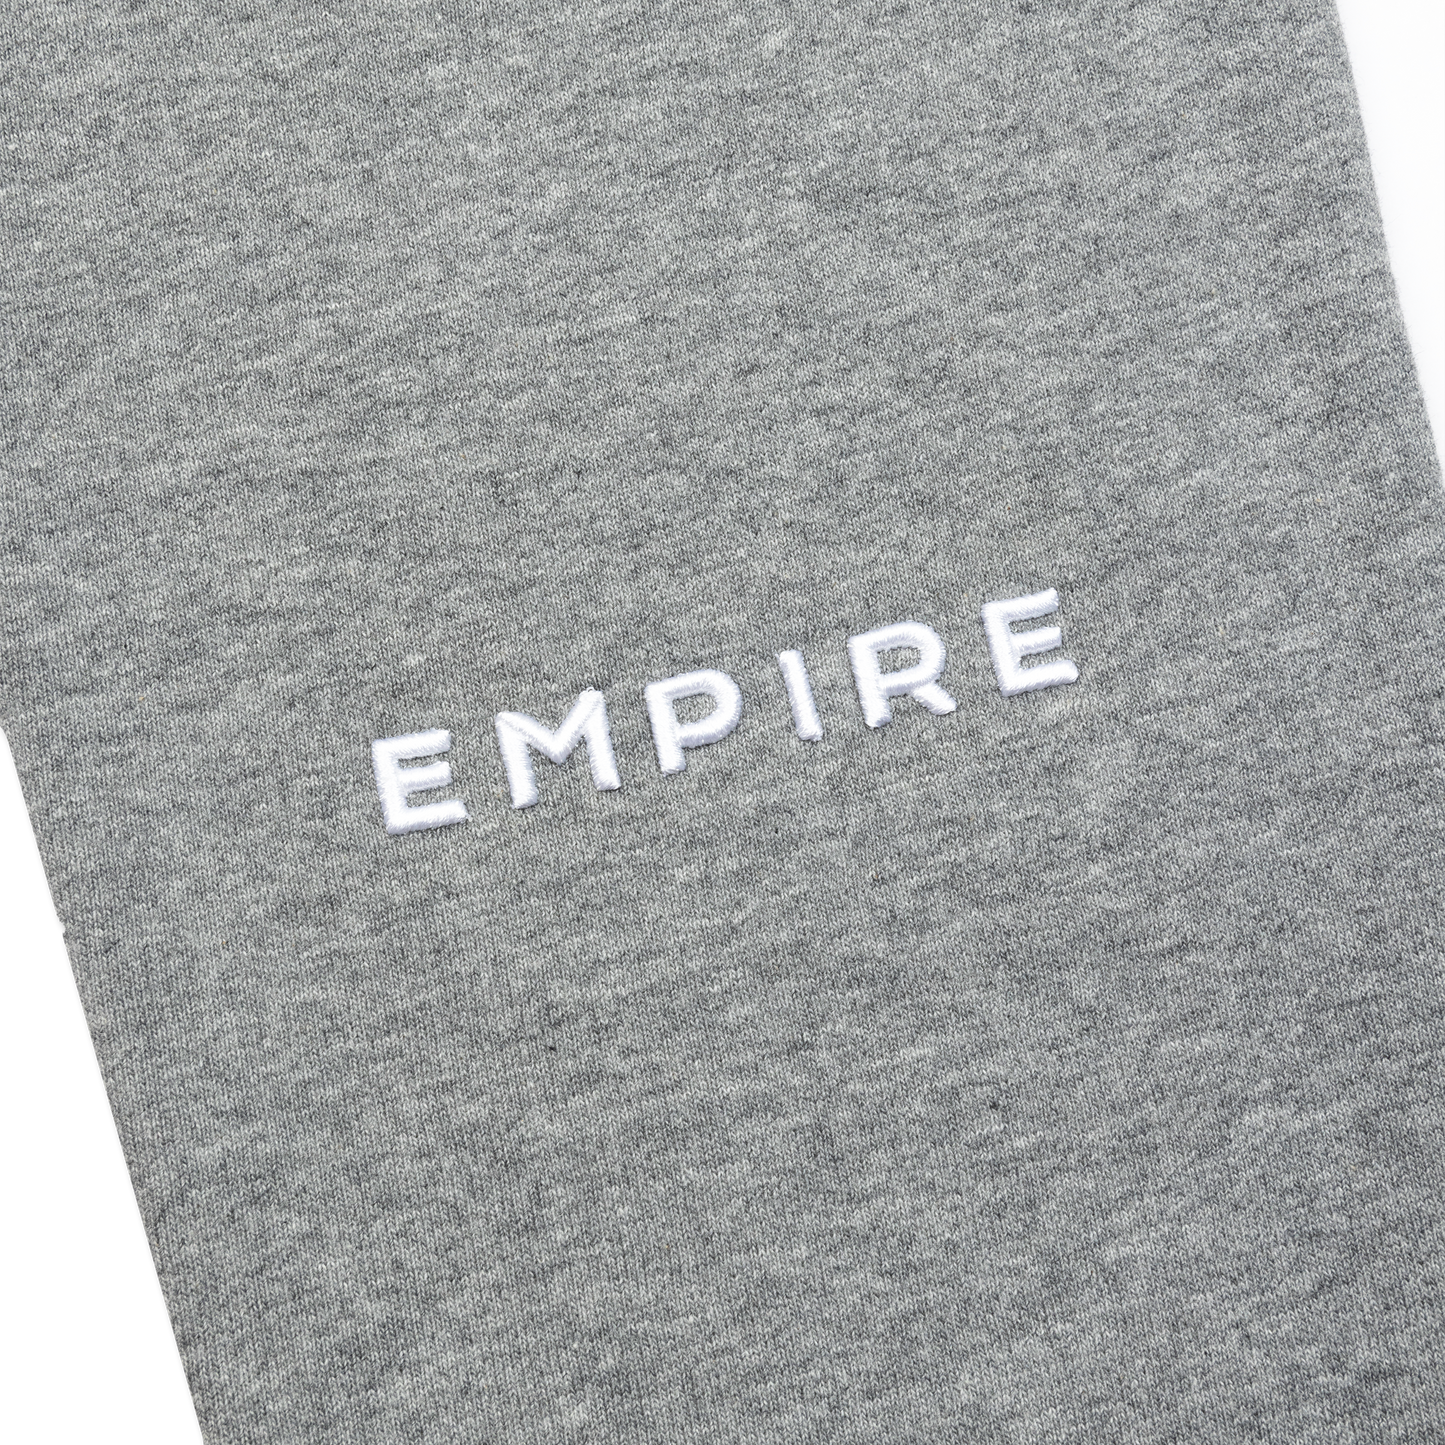 EMPIRE - Staple Sweats (Grey)